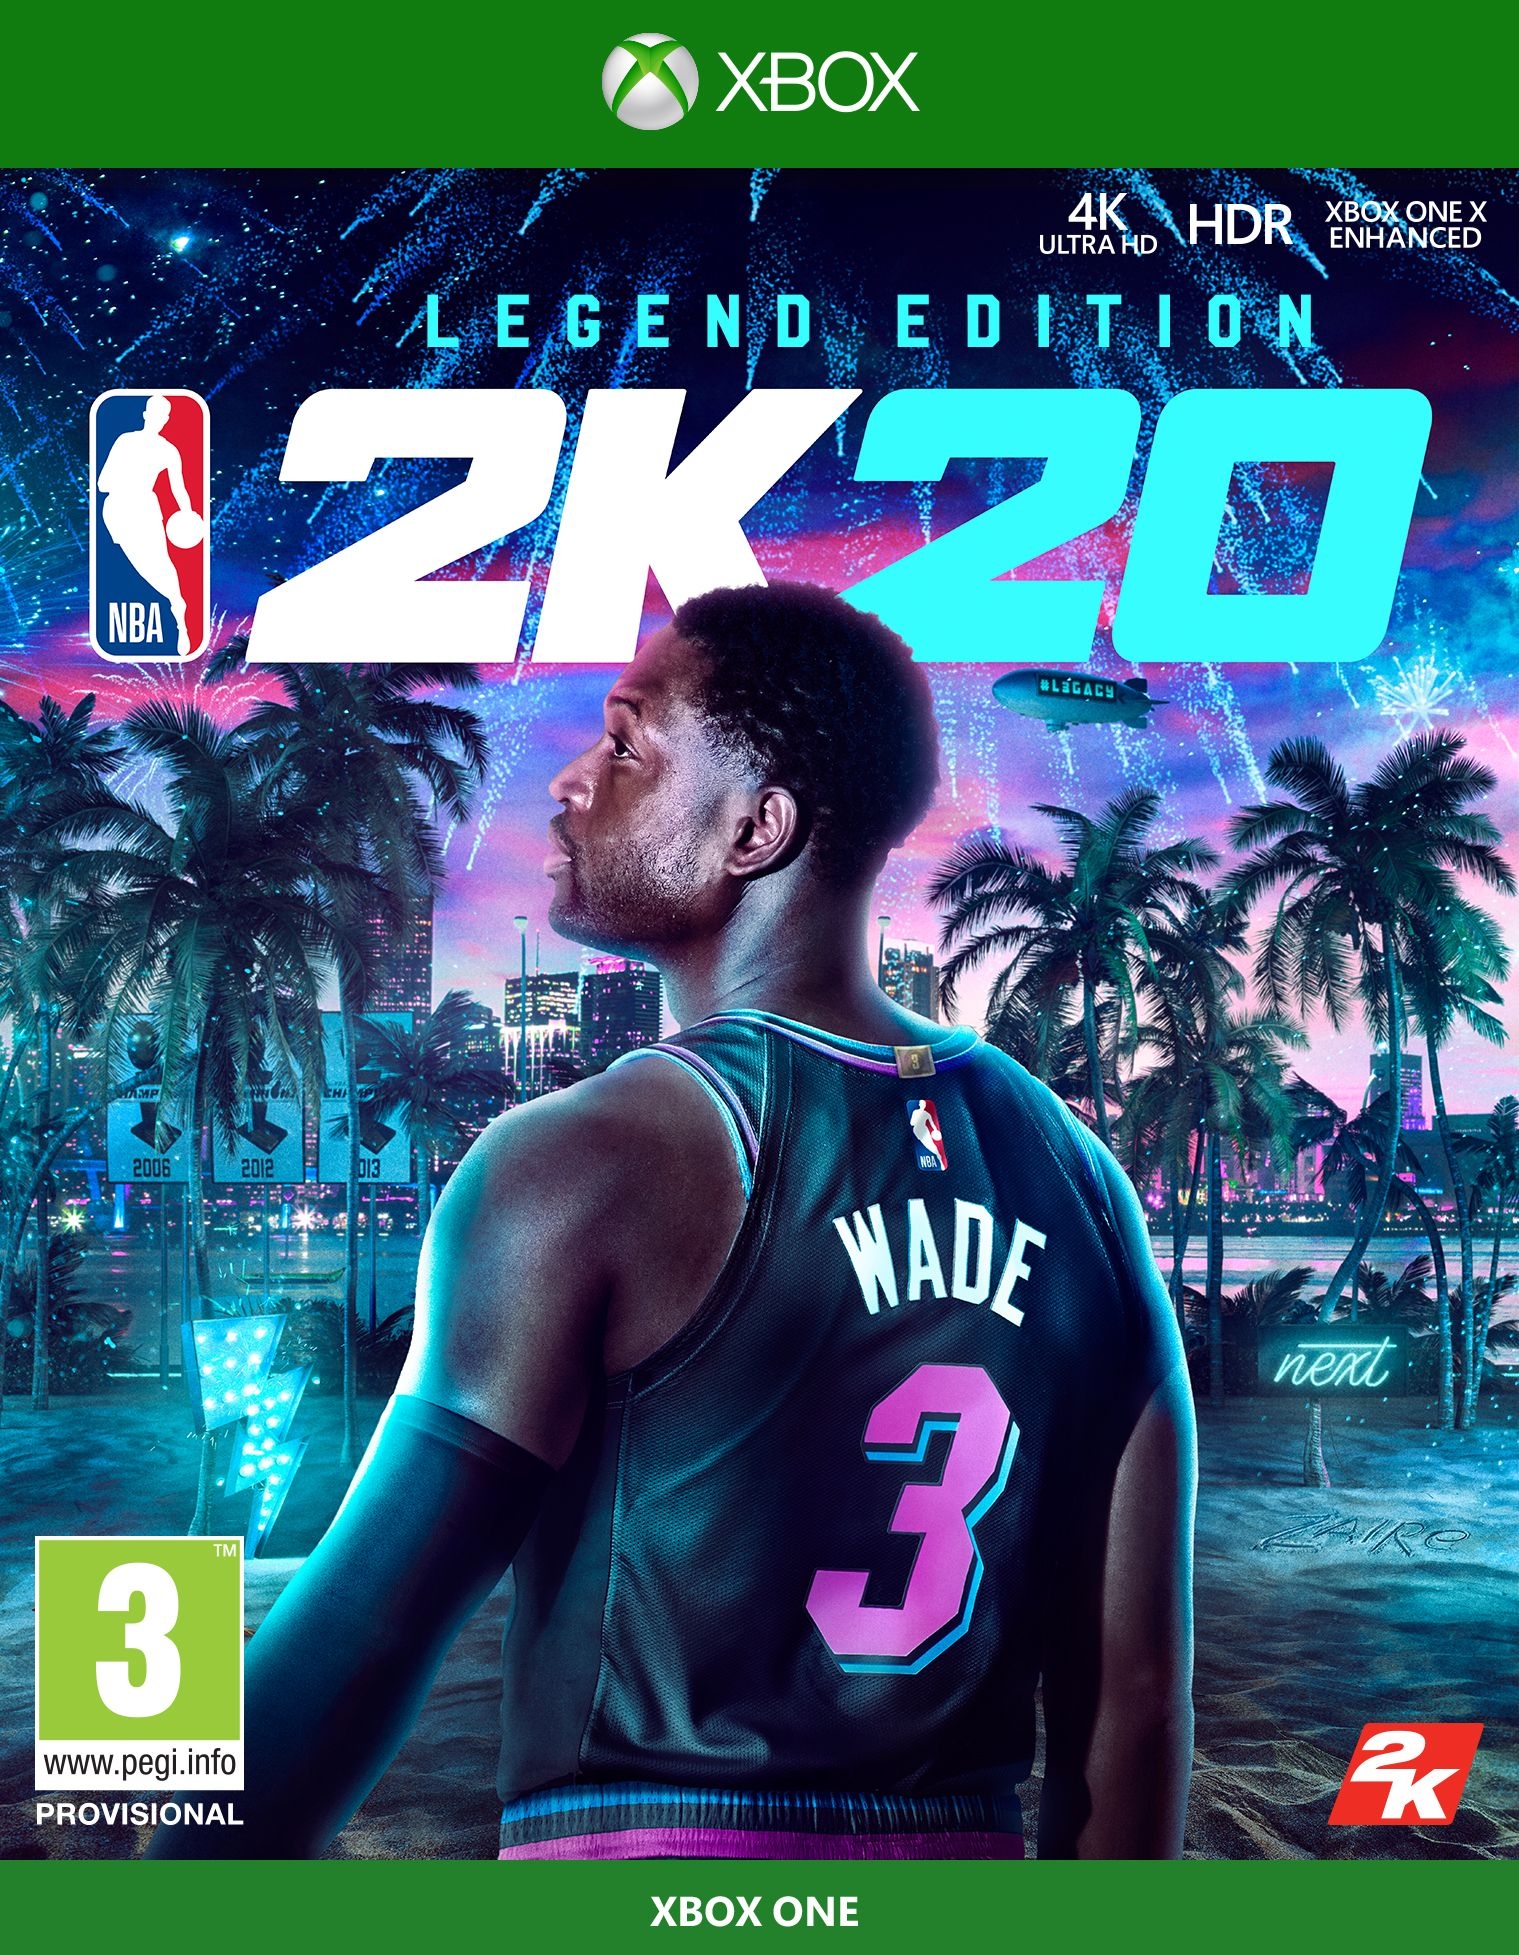 XBOXOne NBA 2K20 Legend Edition